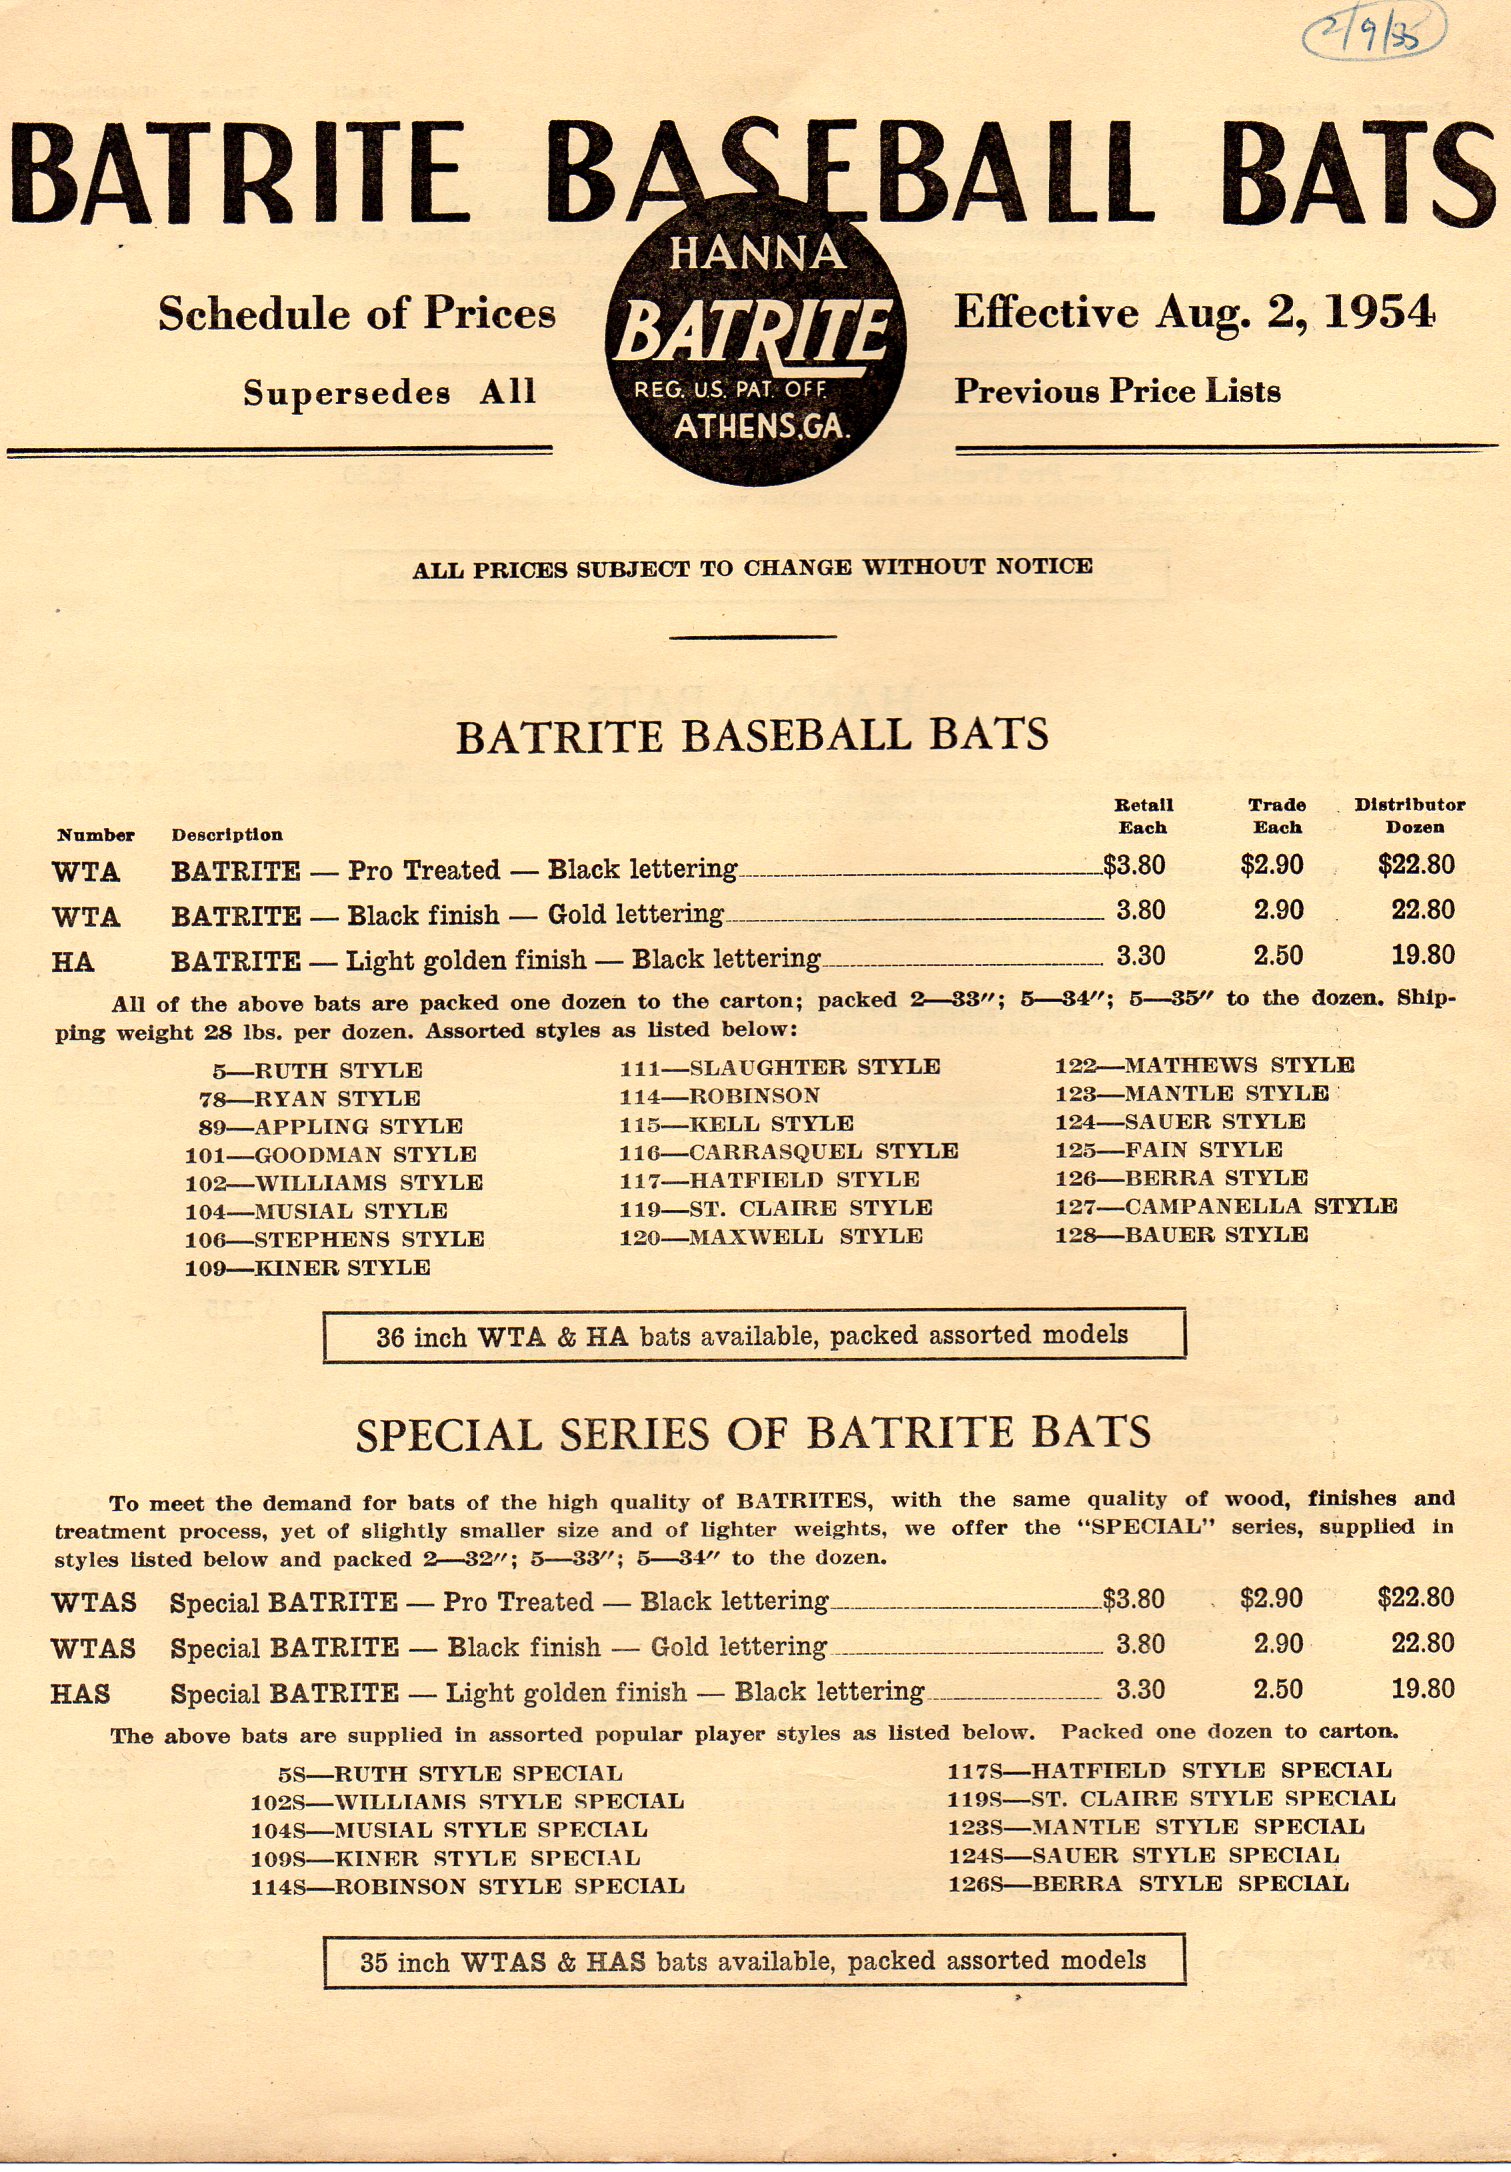 1954 price list